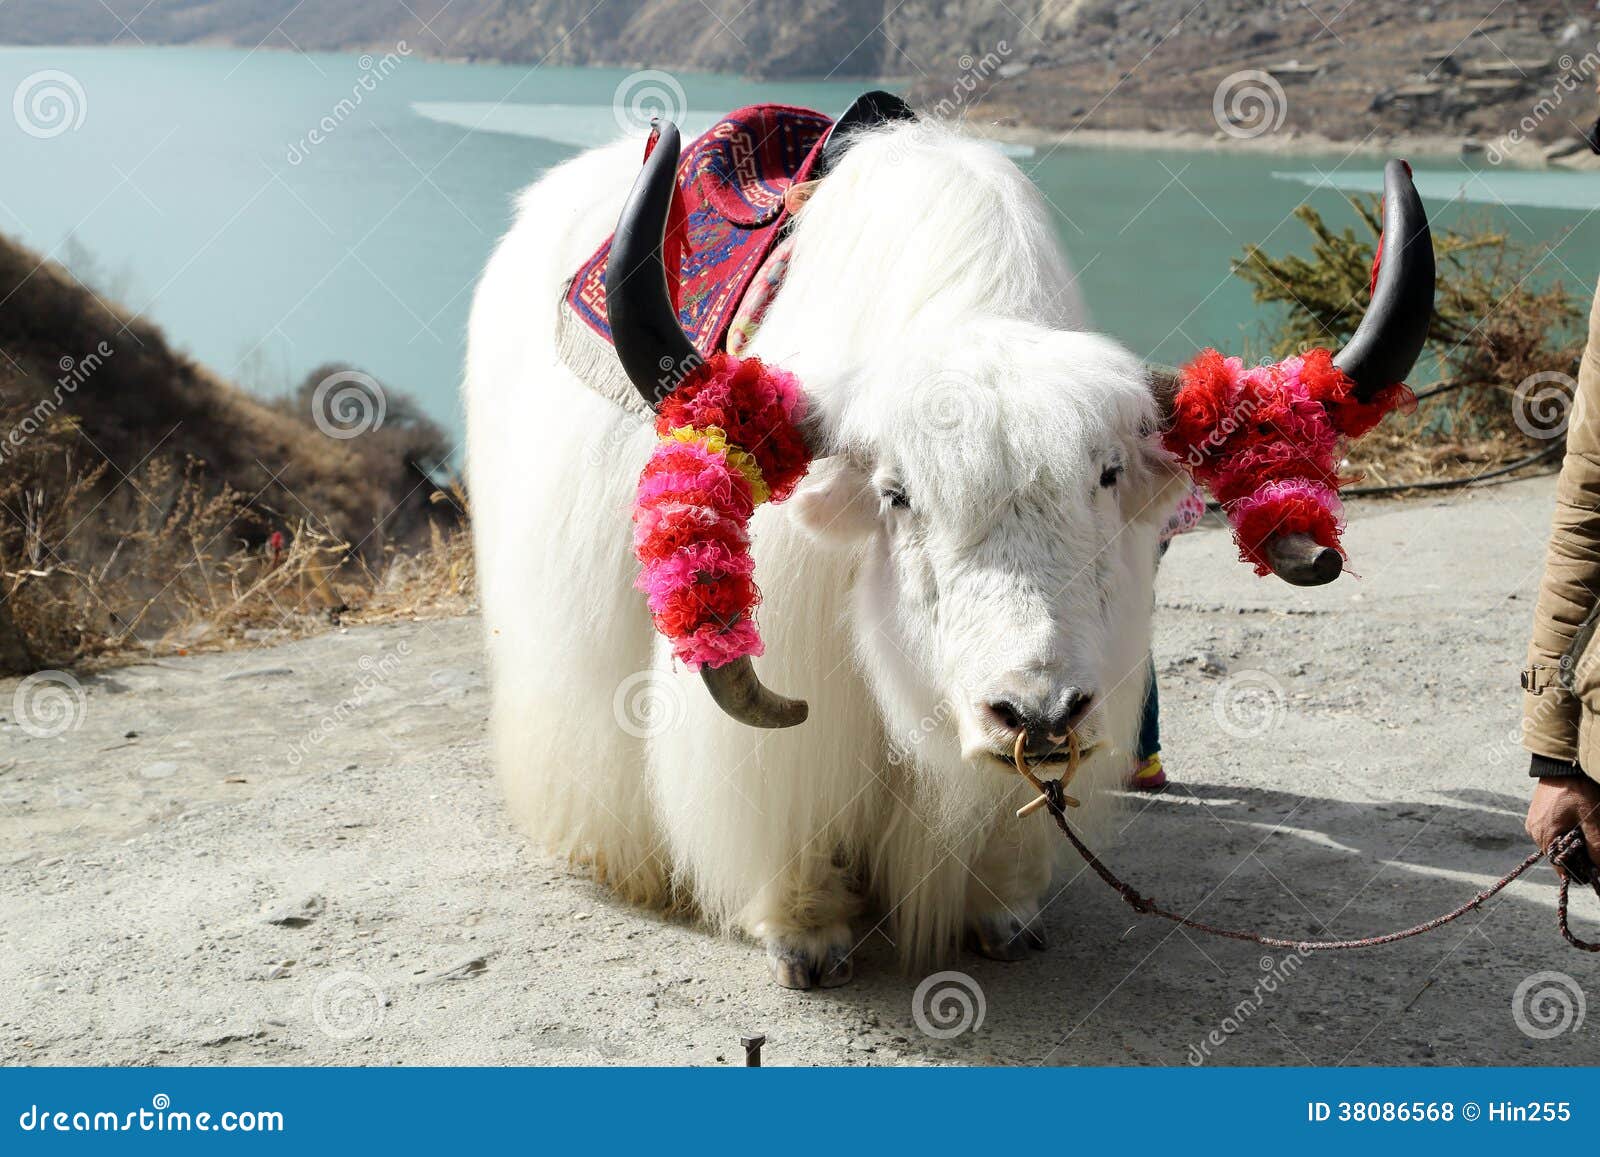 White tibetan yak stock photo. Image of meadow, livestock - 38086568